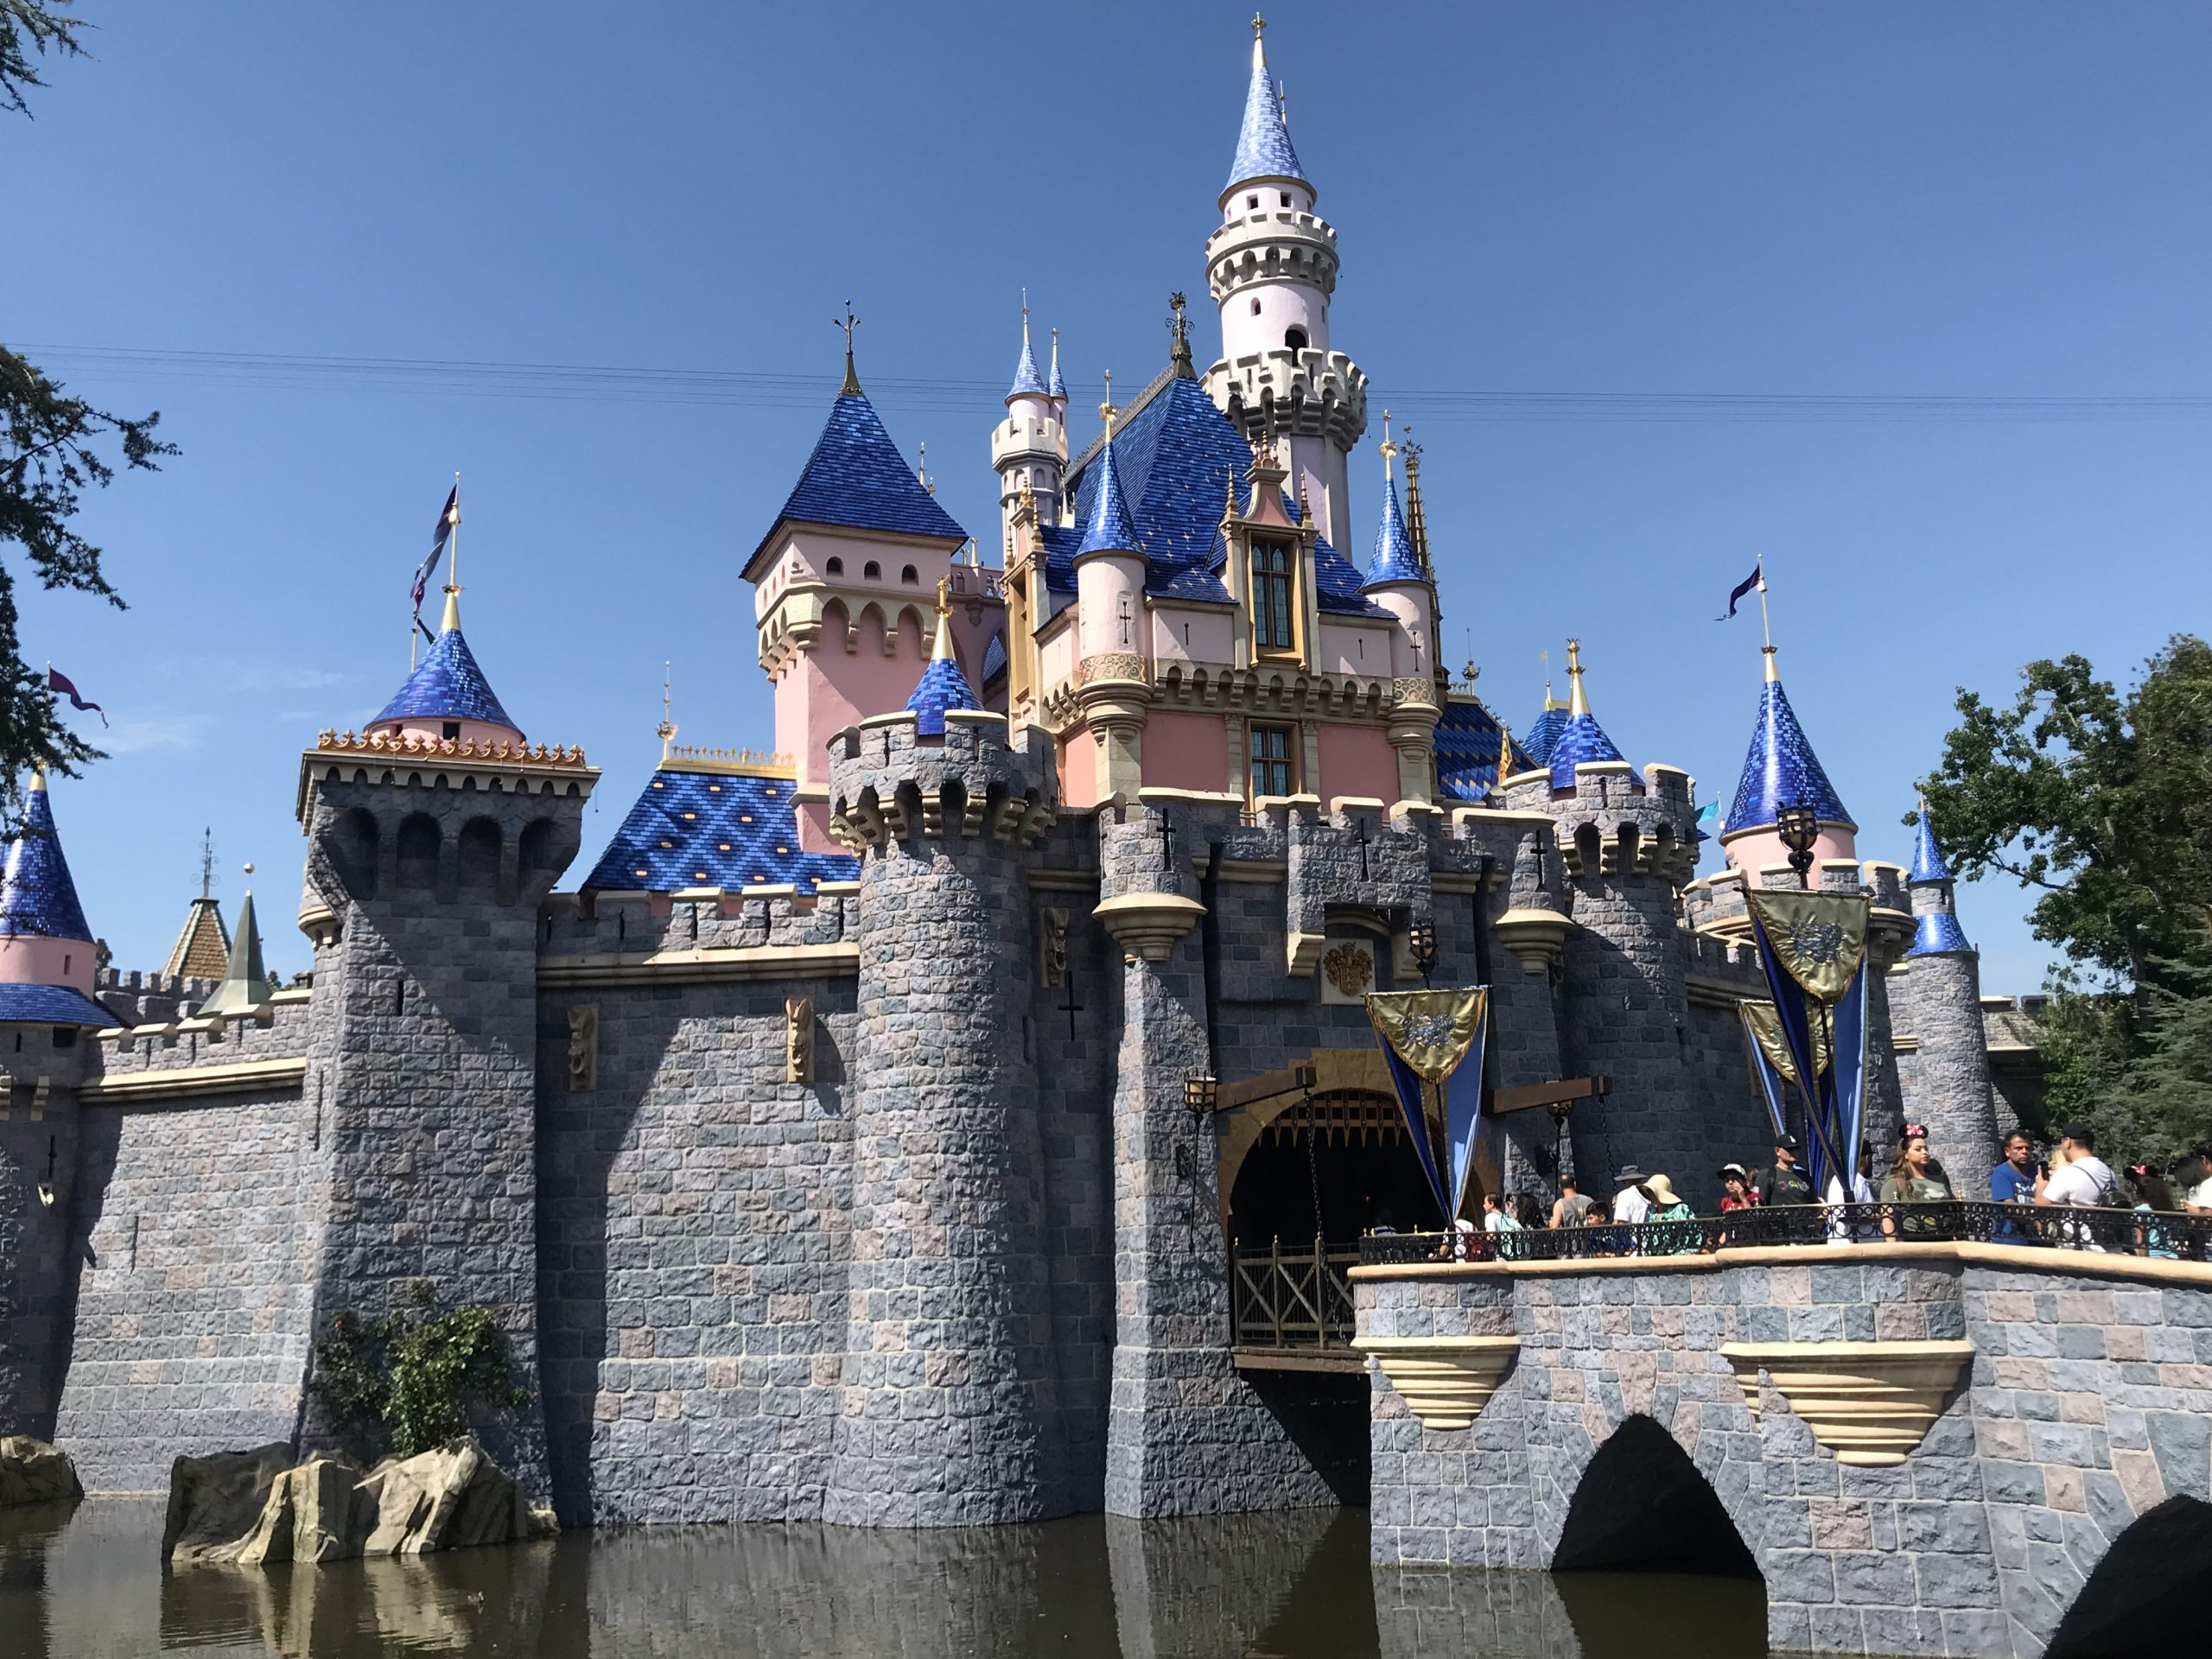 Analysts Predict Disneyland Will Recover After Coronavirus Closure